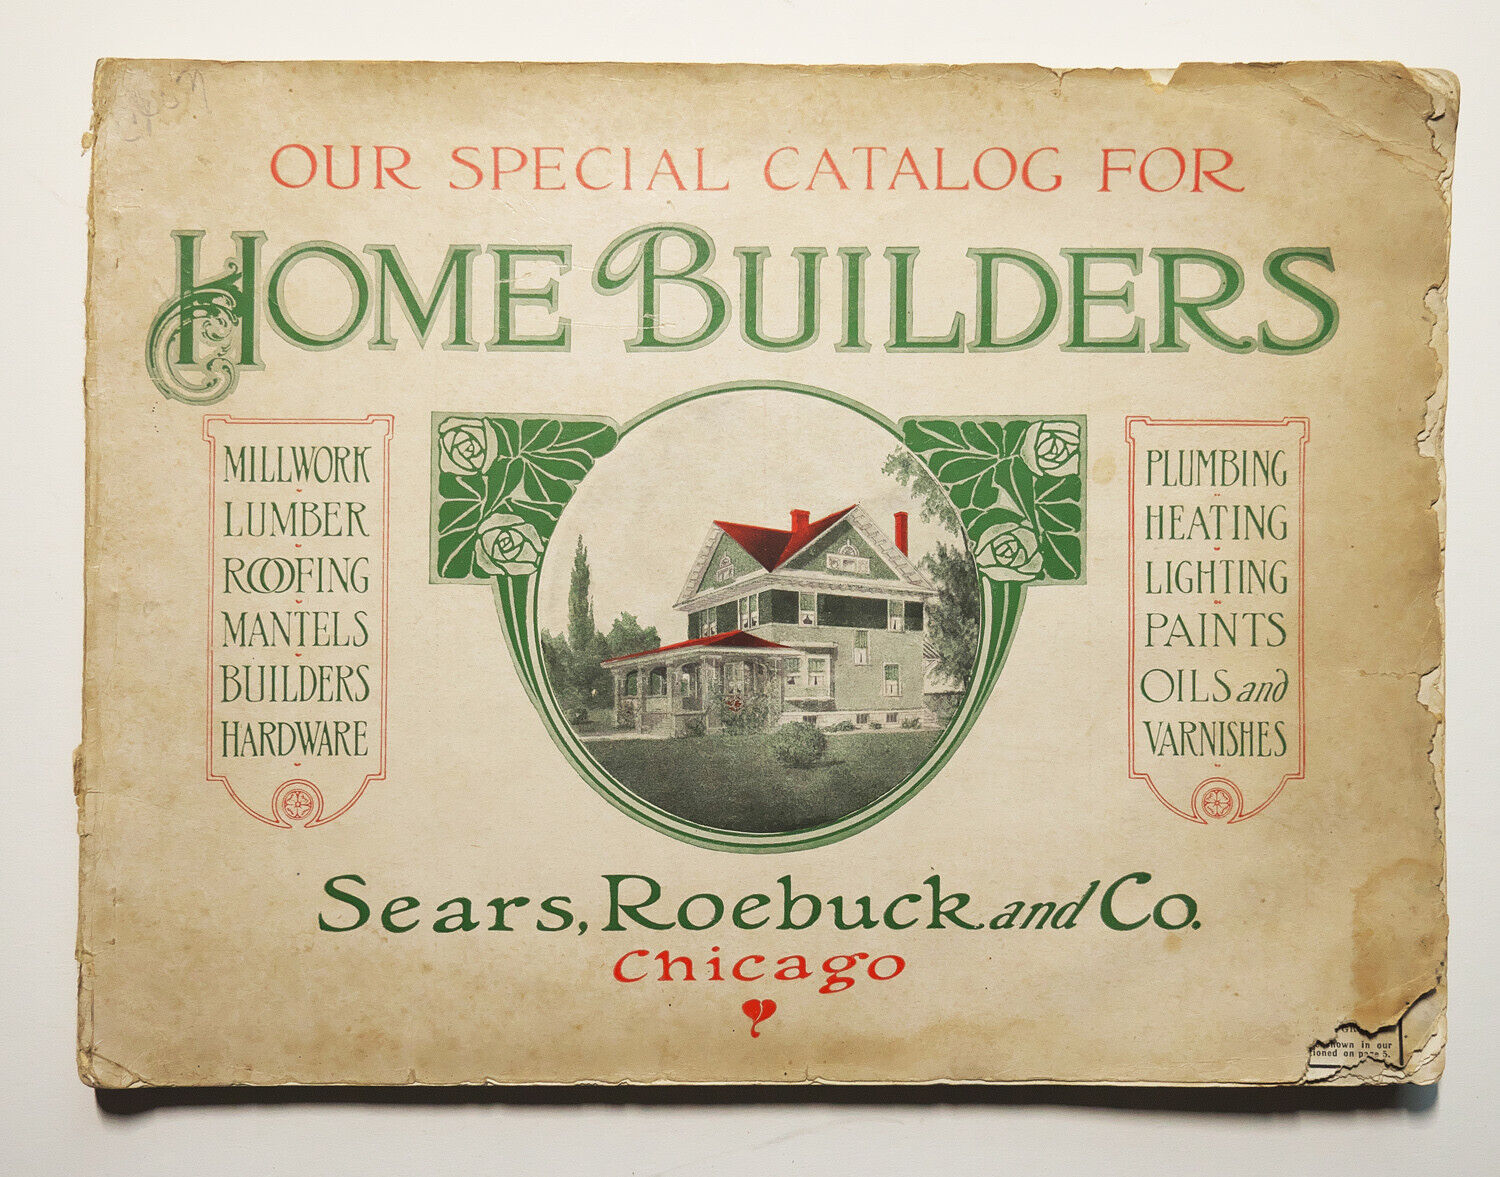 Original c.1910 Sears, Roebuck HOME BUILDERS CATALOG, Not a Reprint